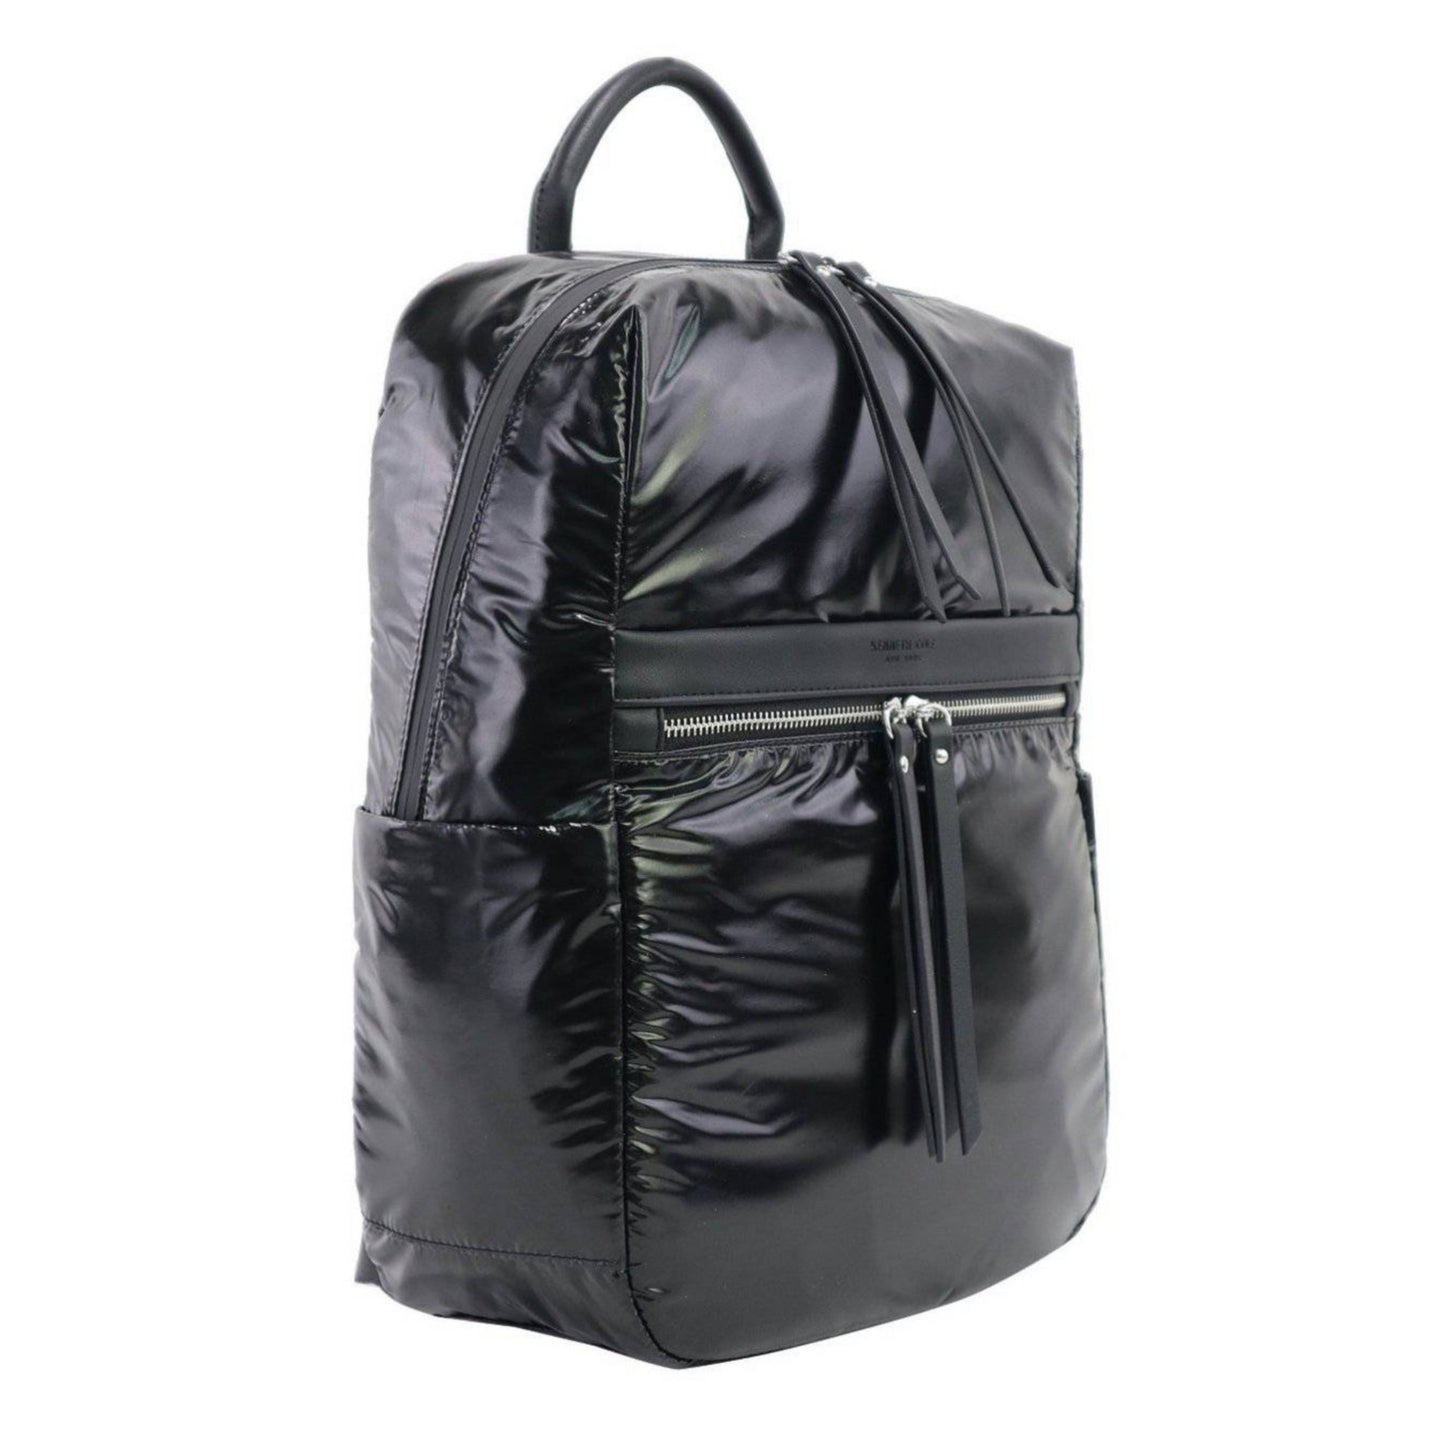 Kenneth Cole New York Hanover Backpack (Black/Silver)